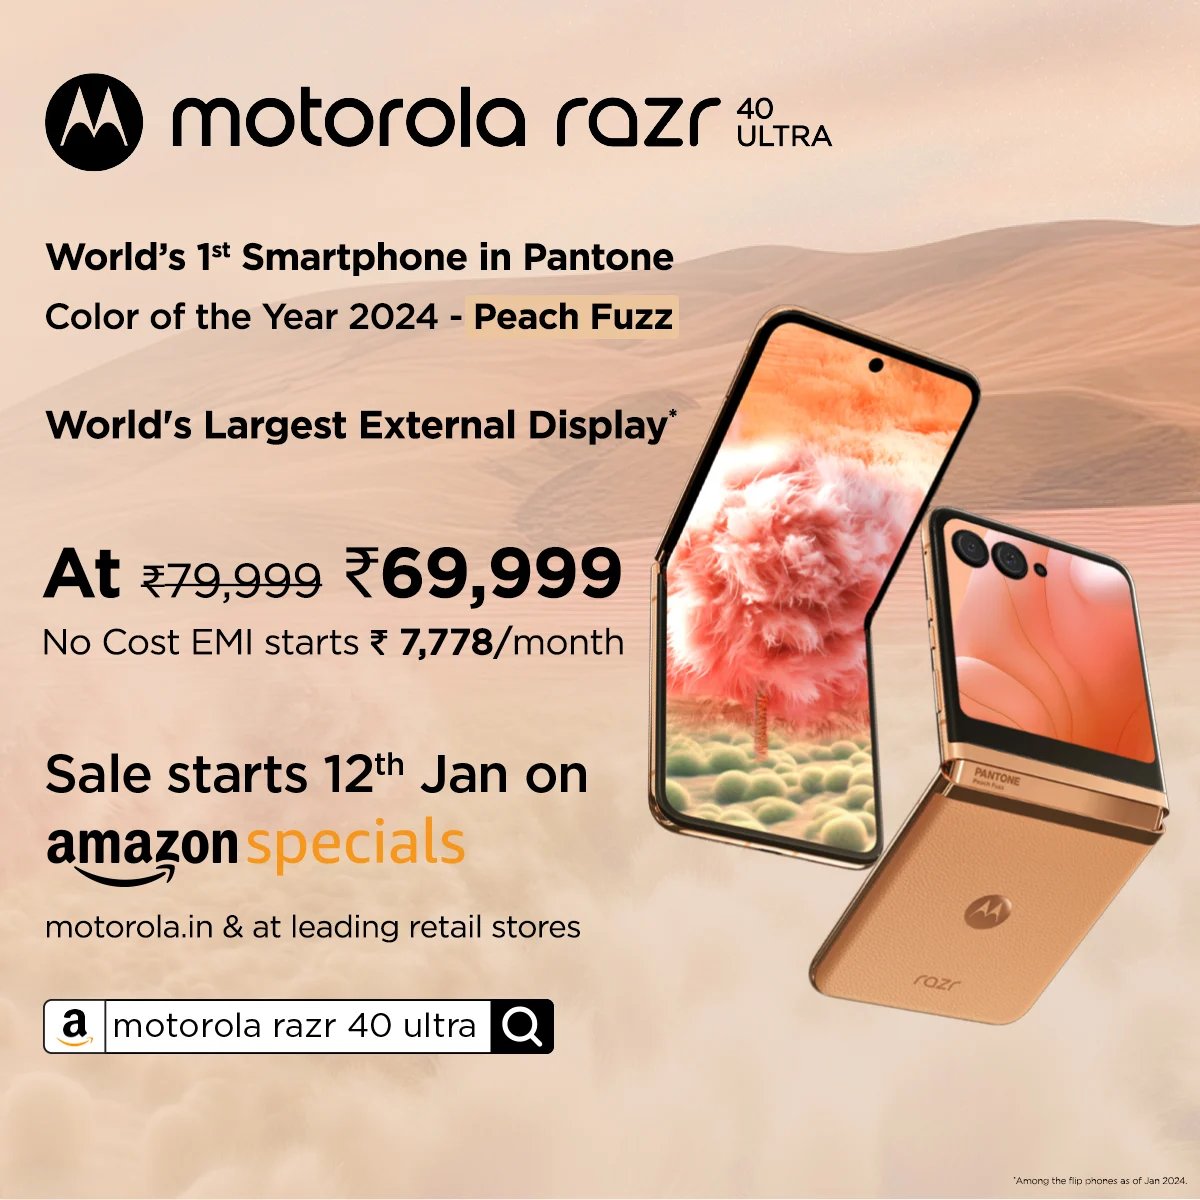 motorola razr 40 Ultra Peach Fuzz colour variant sale starts on January 12th in India.
#motorola #motorolarazr40Ultra